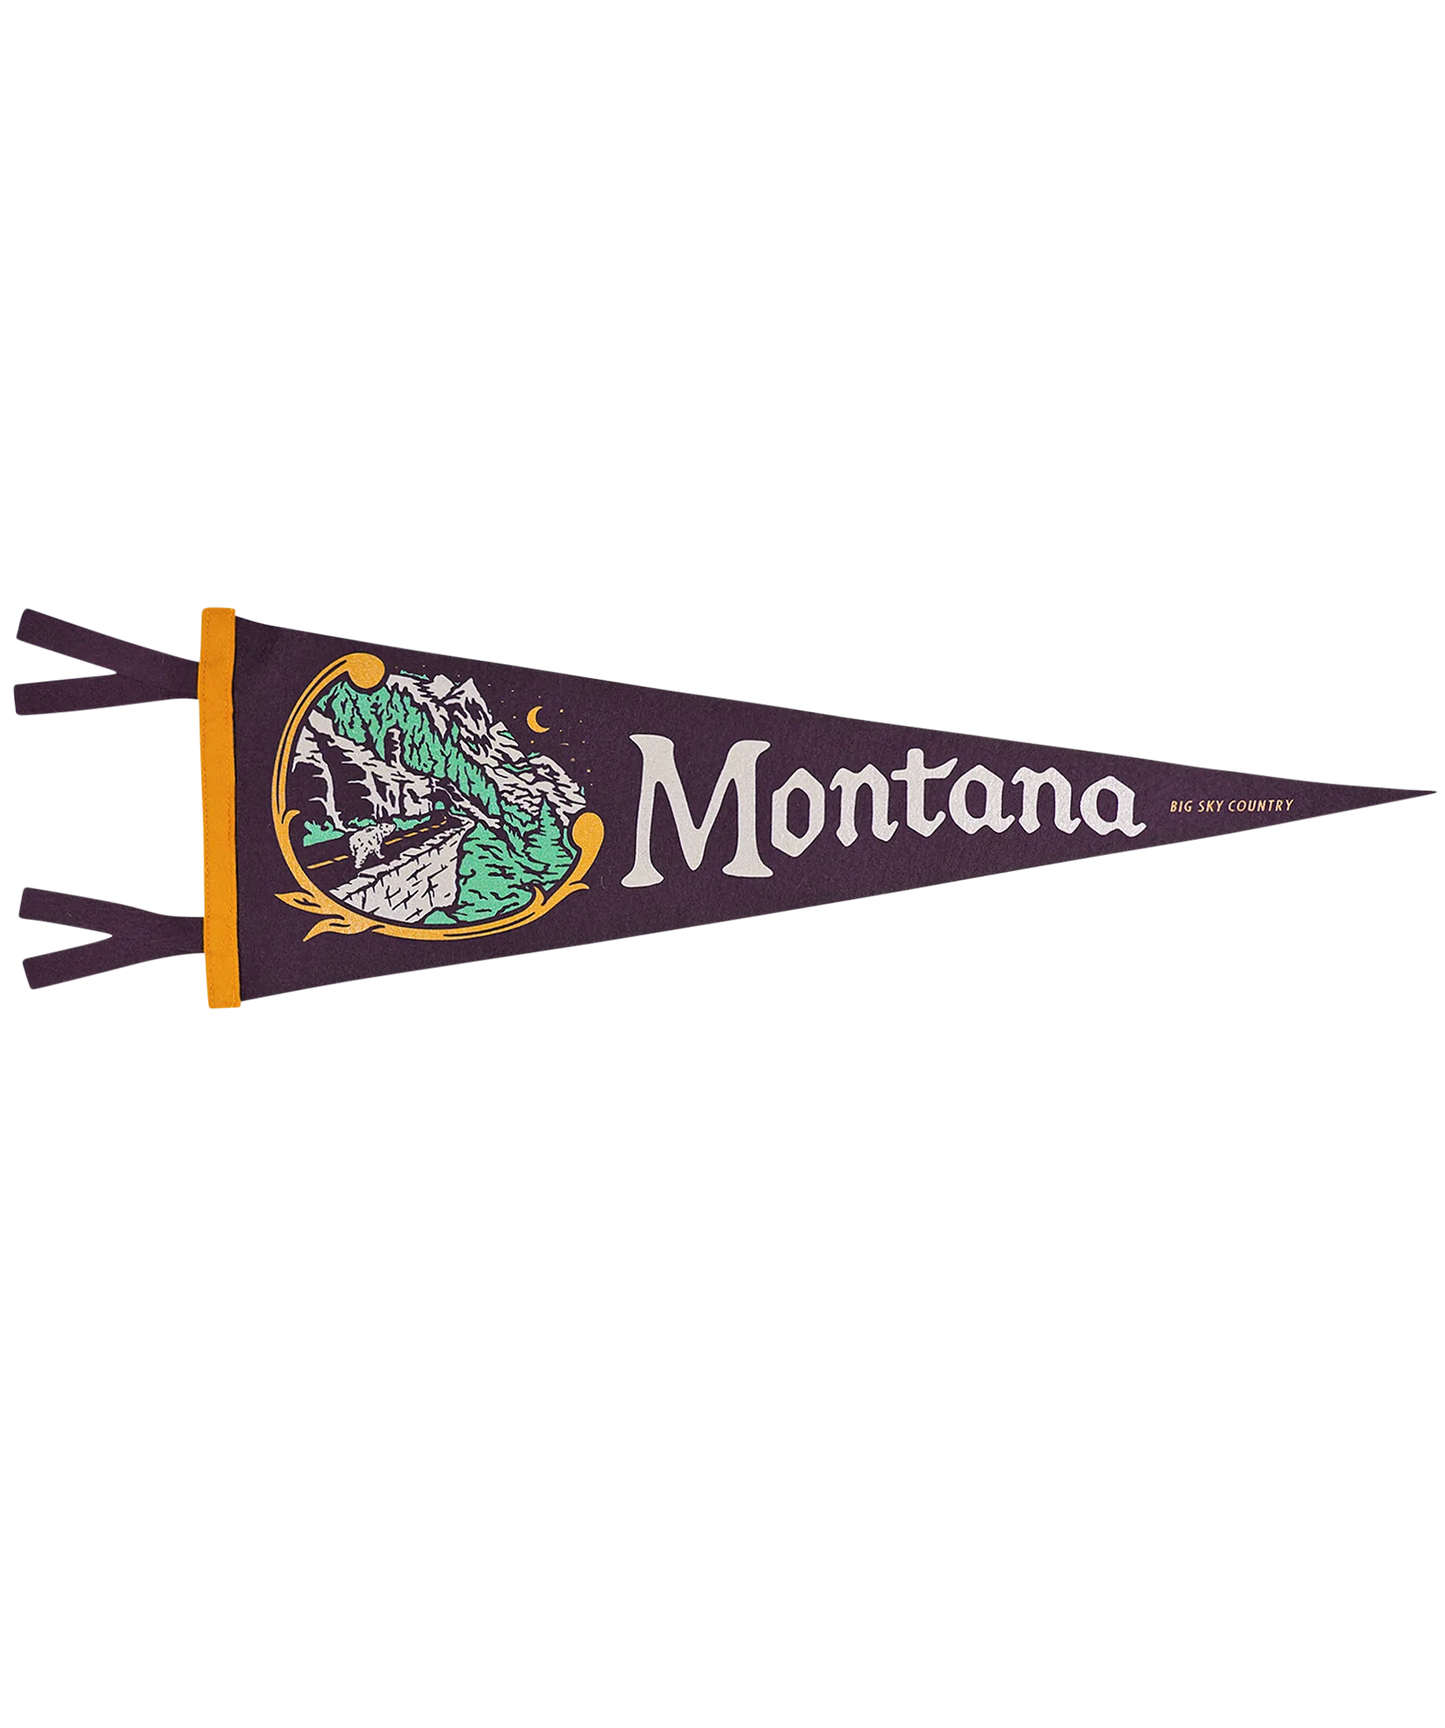 Montana Pennant